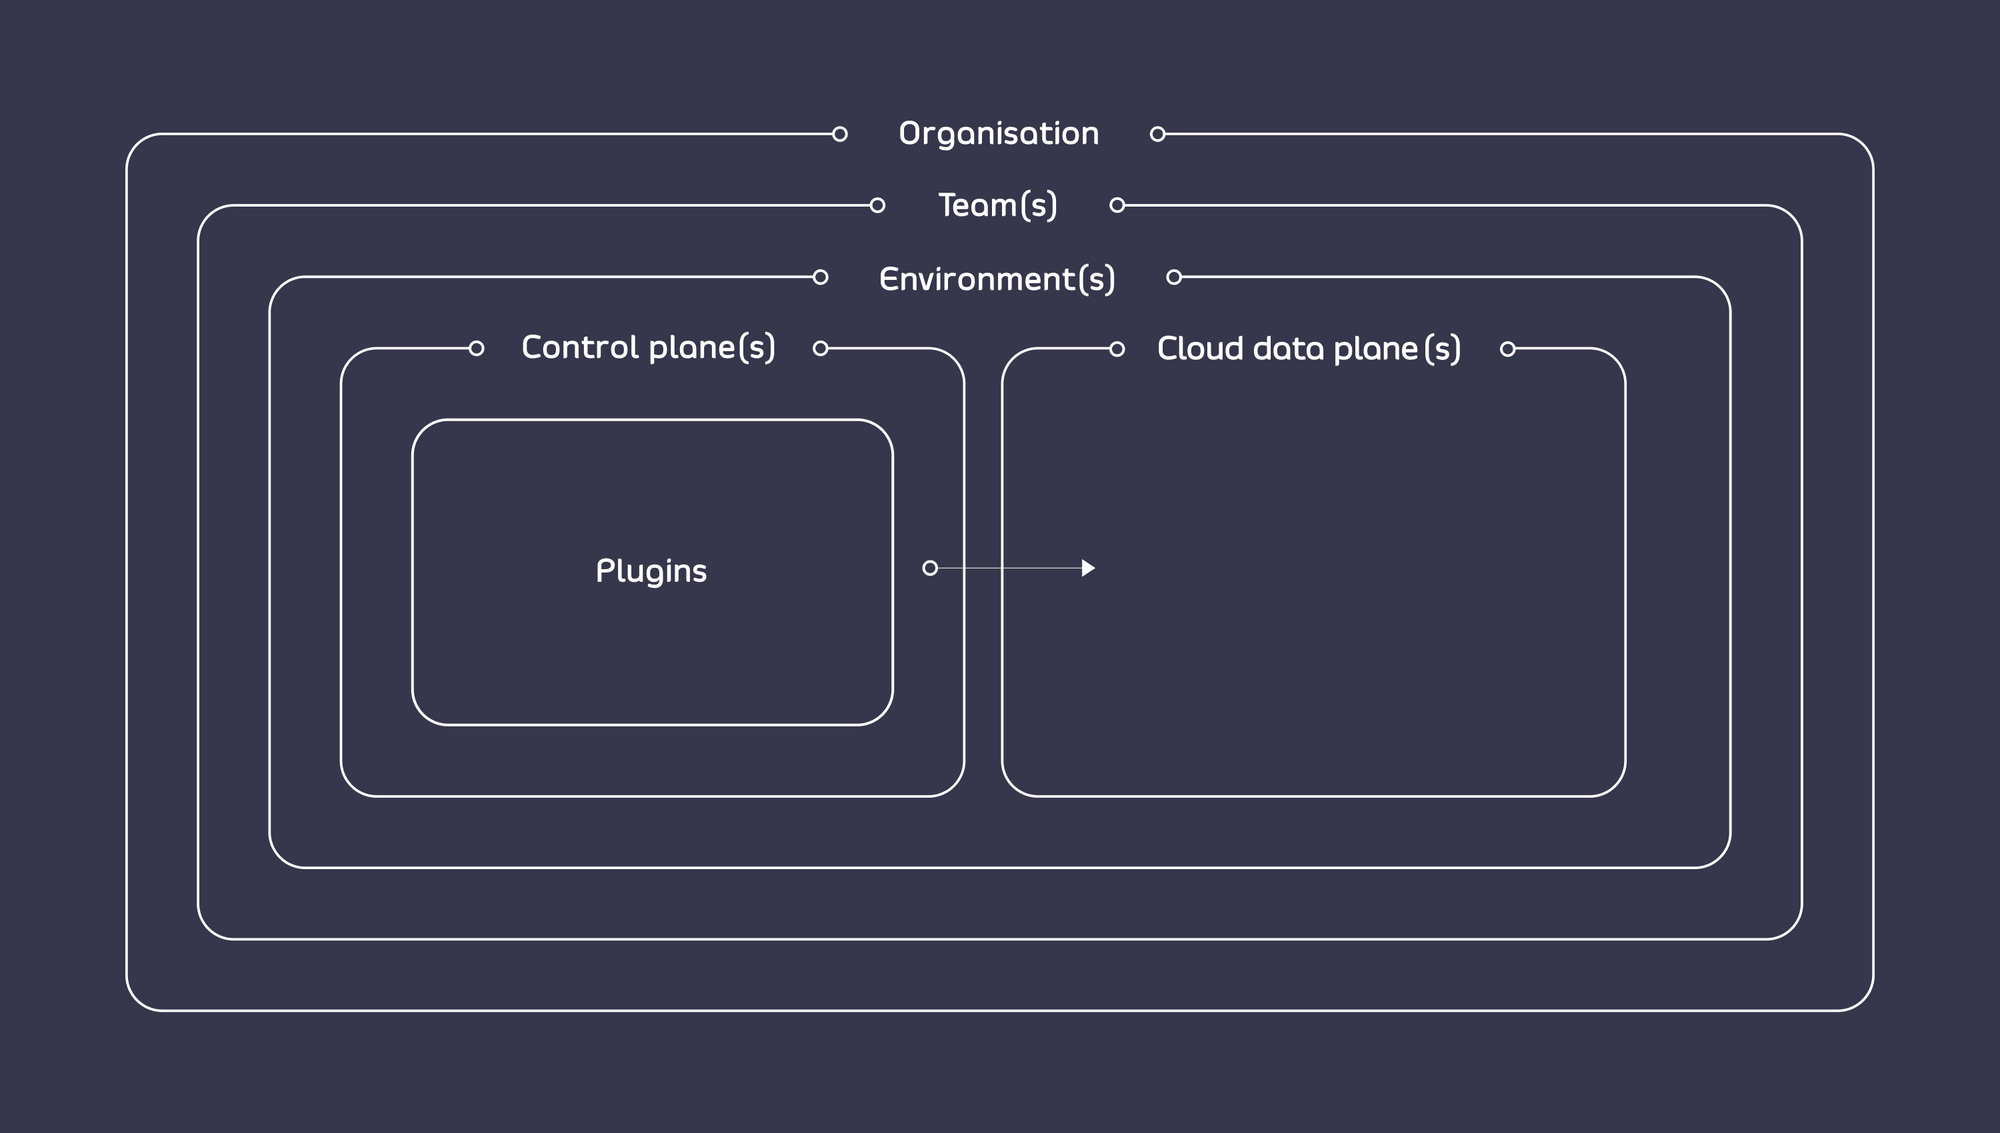 Hierarchy of Organisation, Teams, Environments, Control Planes and Cloud Data Planes